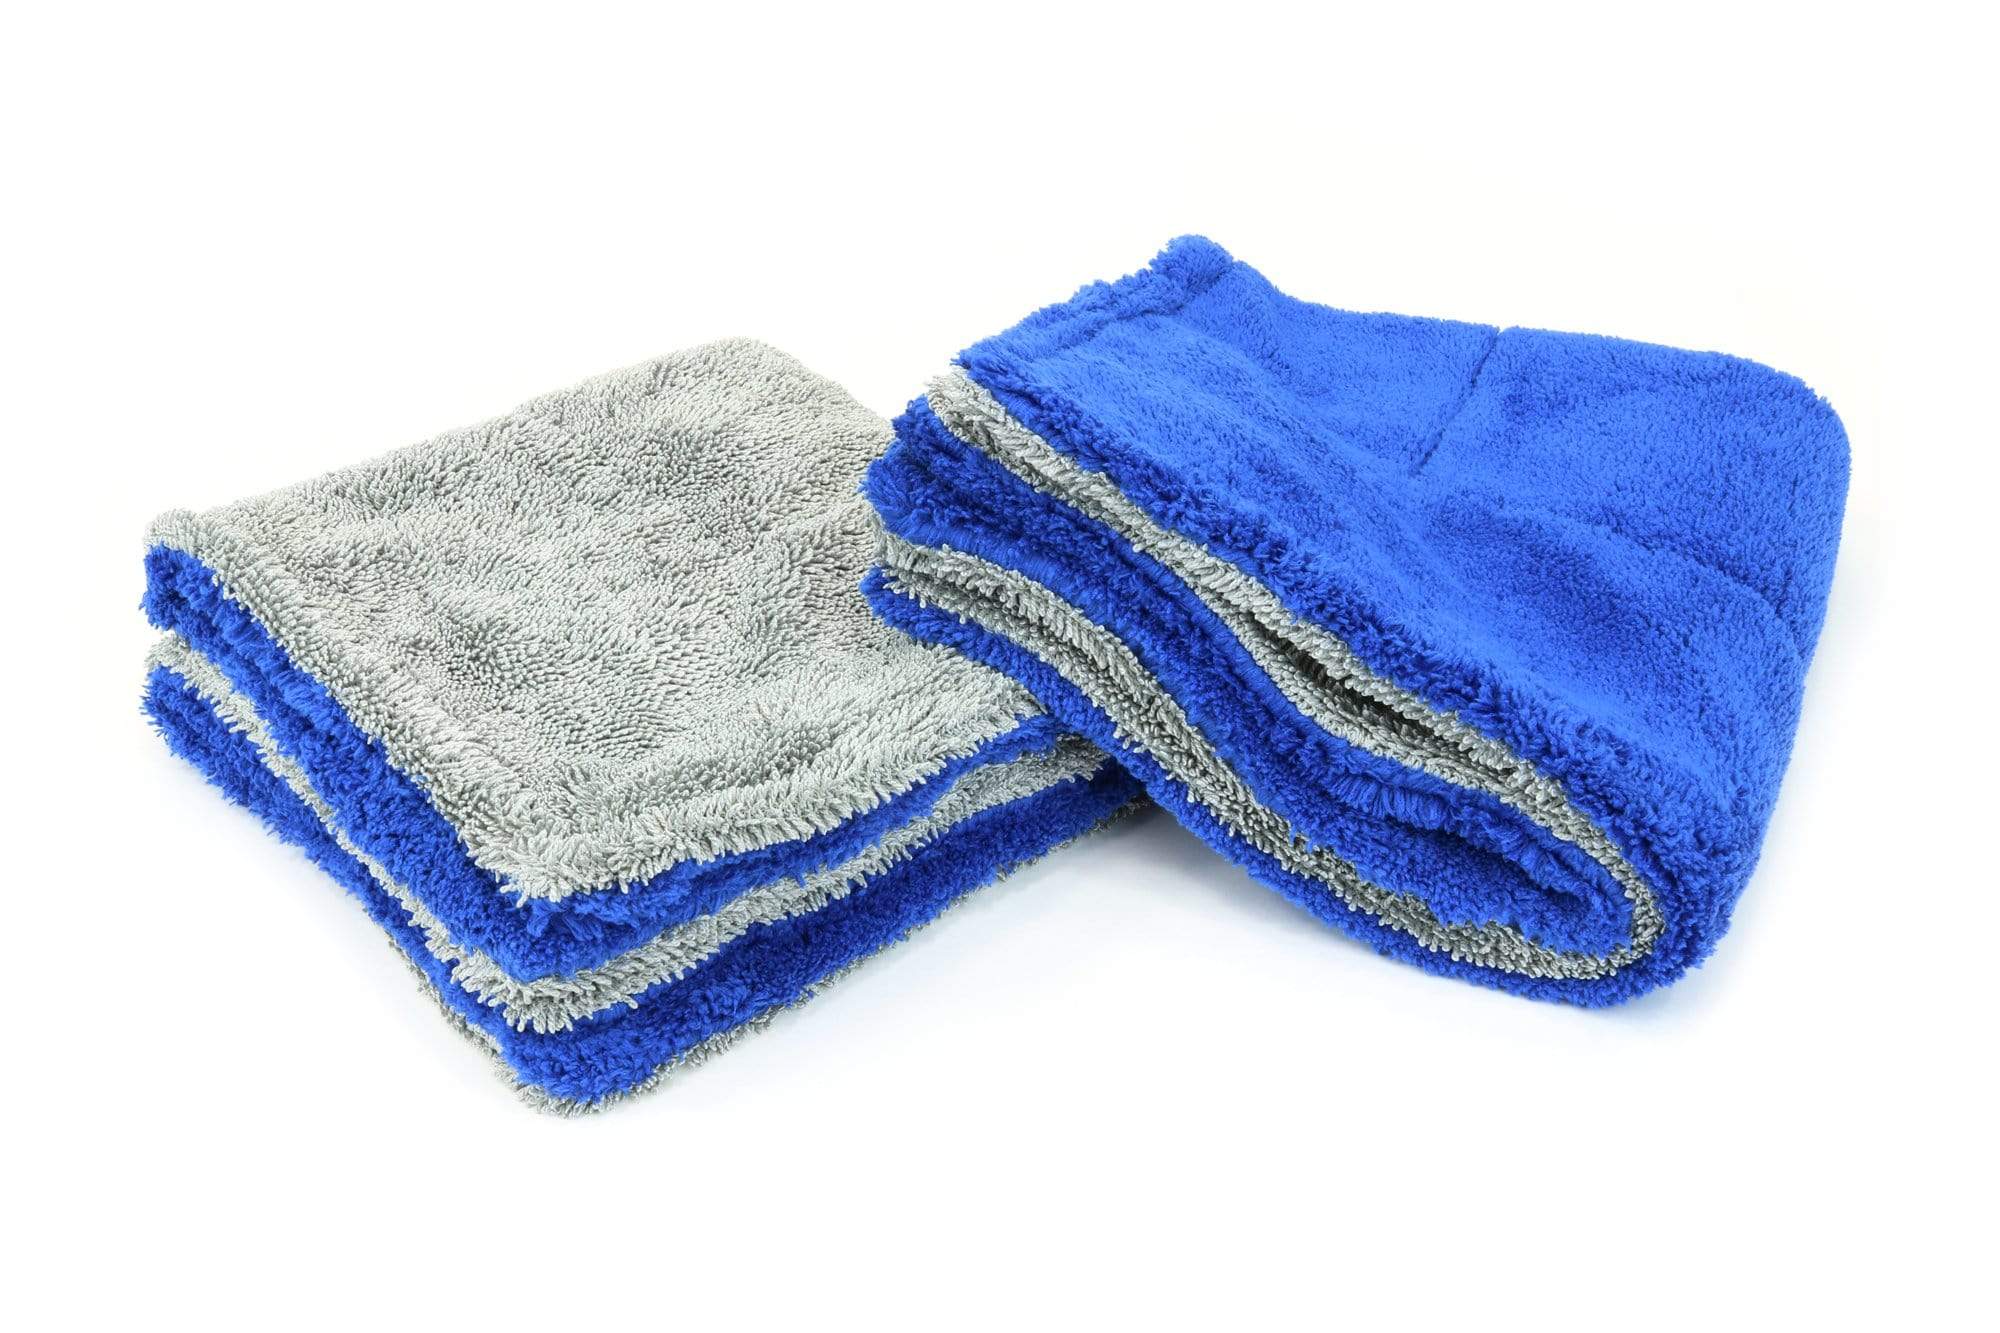 AUTOFIBER AMPHIBIAN XL - Microfiber Drying Towel (20 in. x 40 in., 1100gsm)  - 1 pack